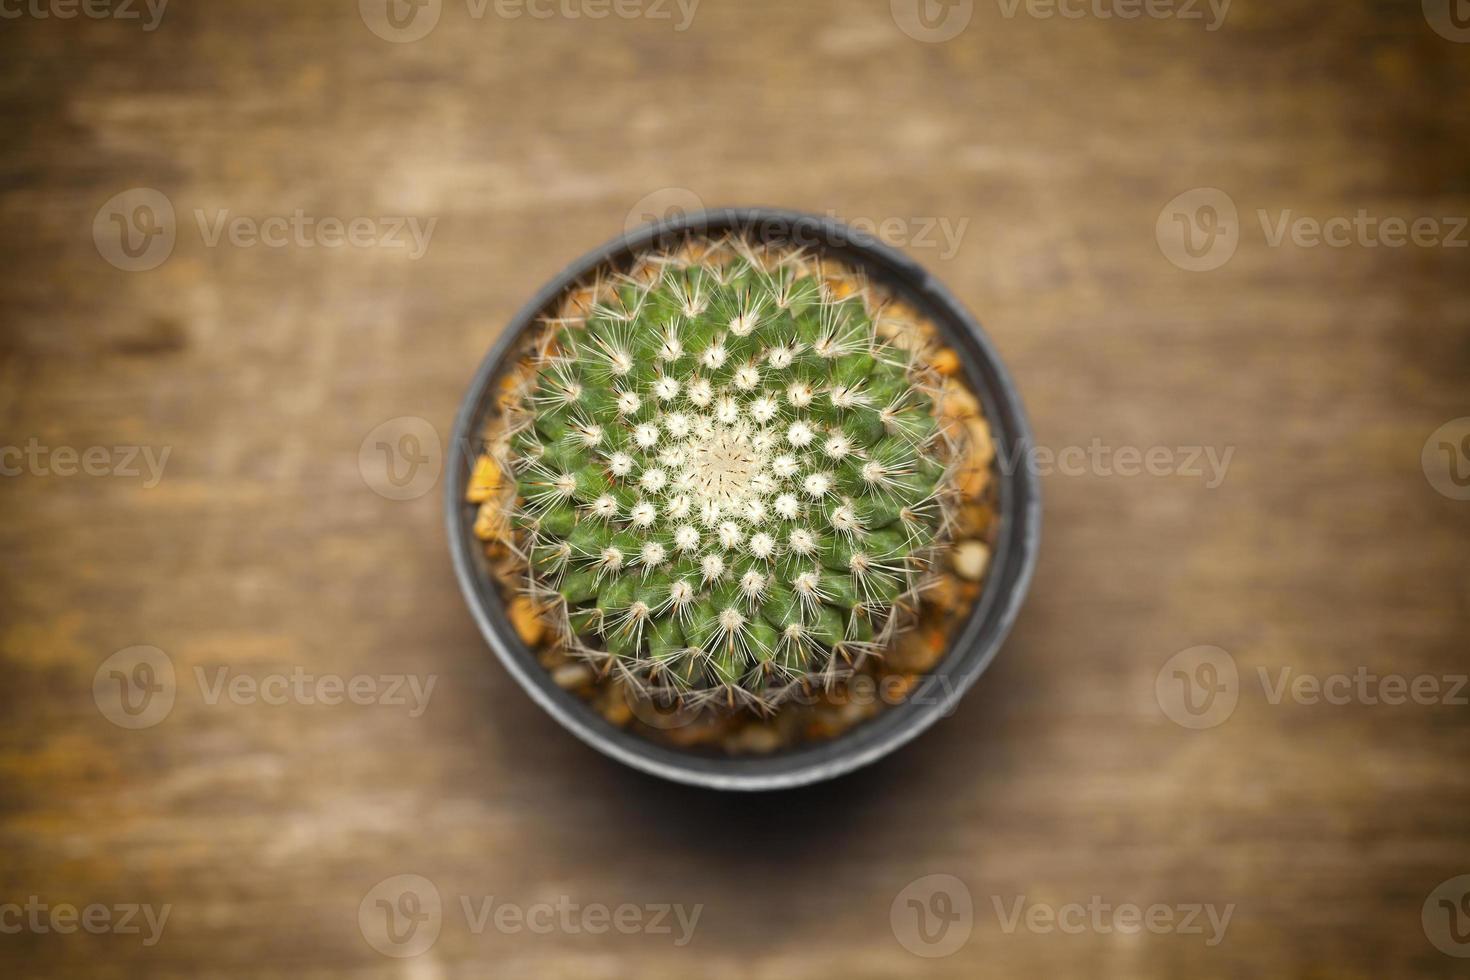 kaktus på träbord. foto